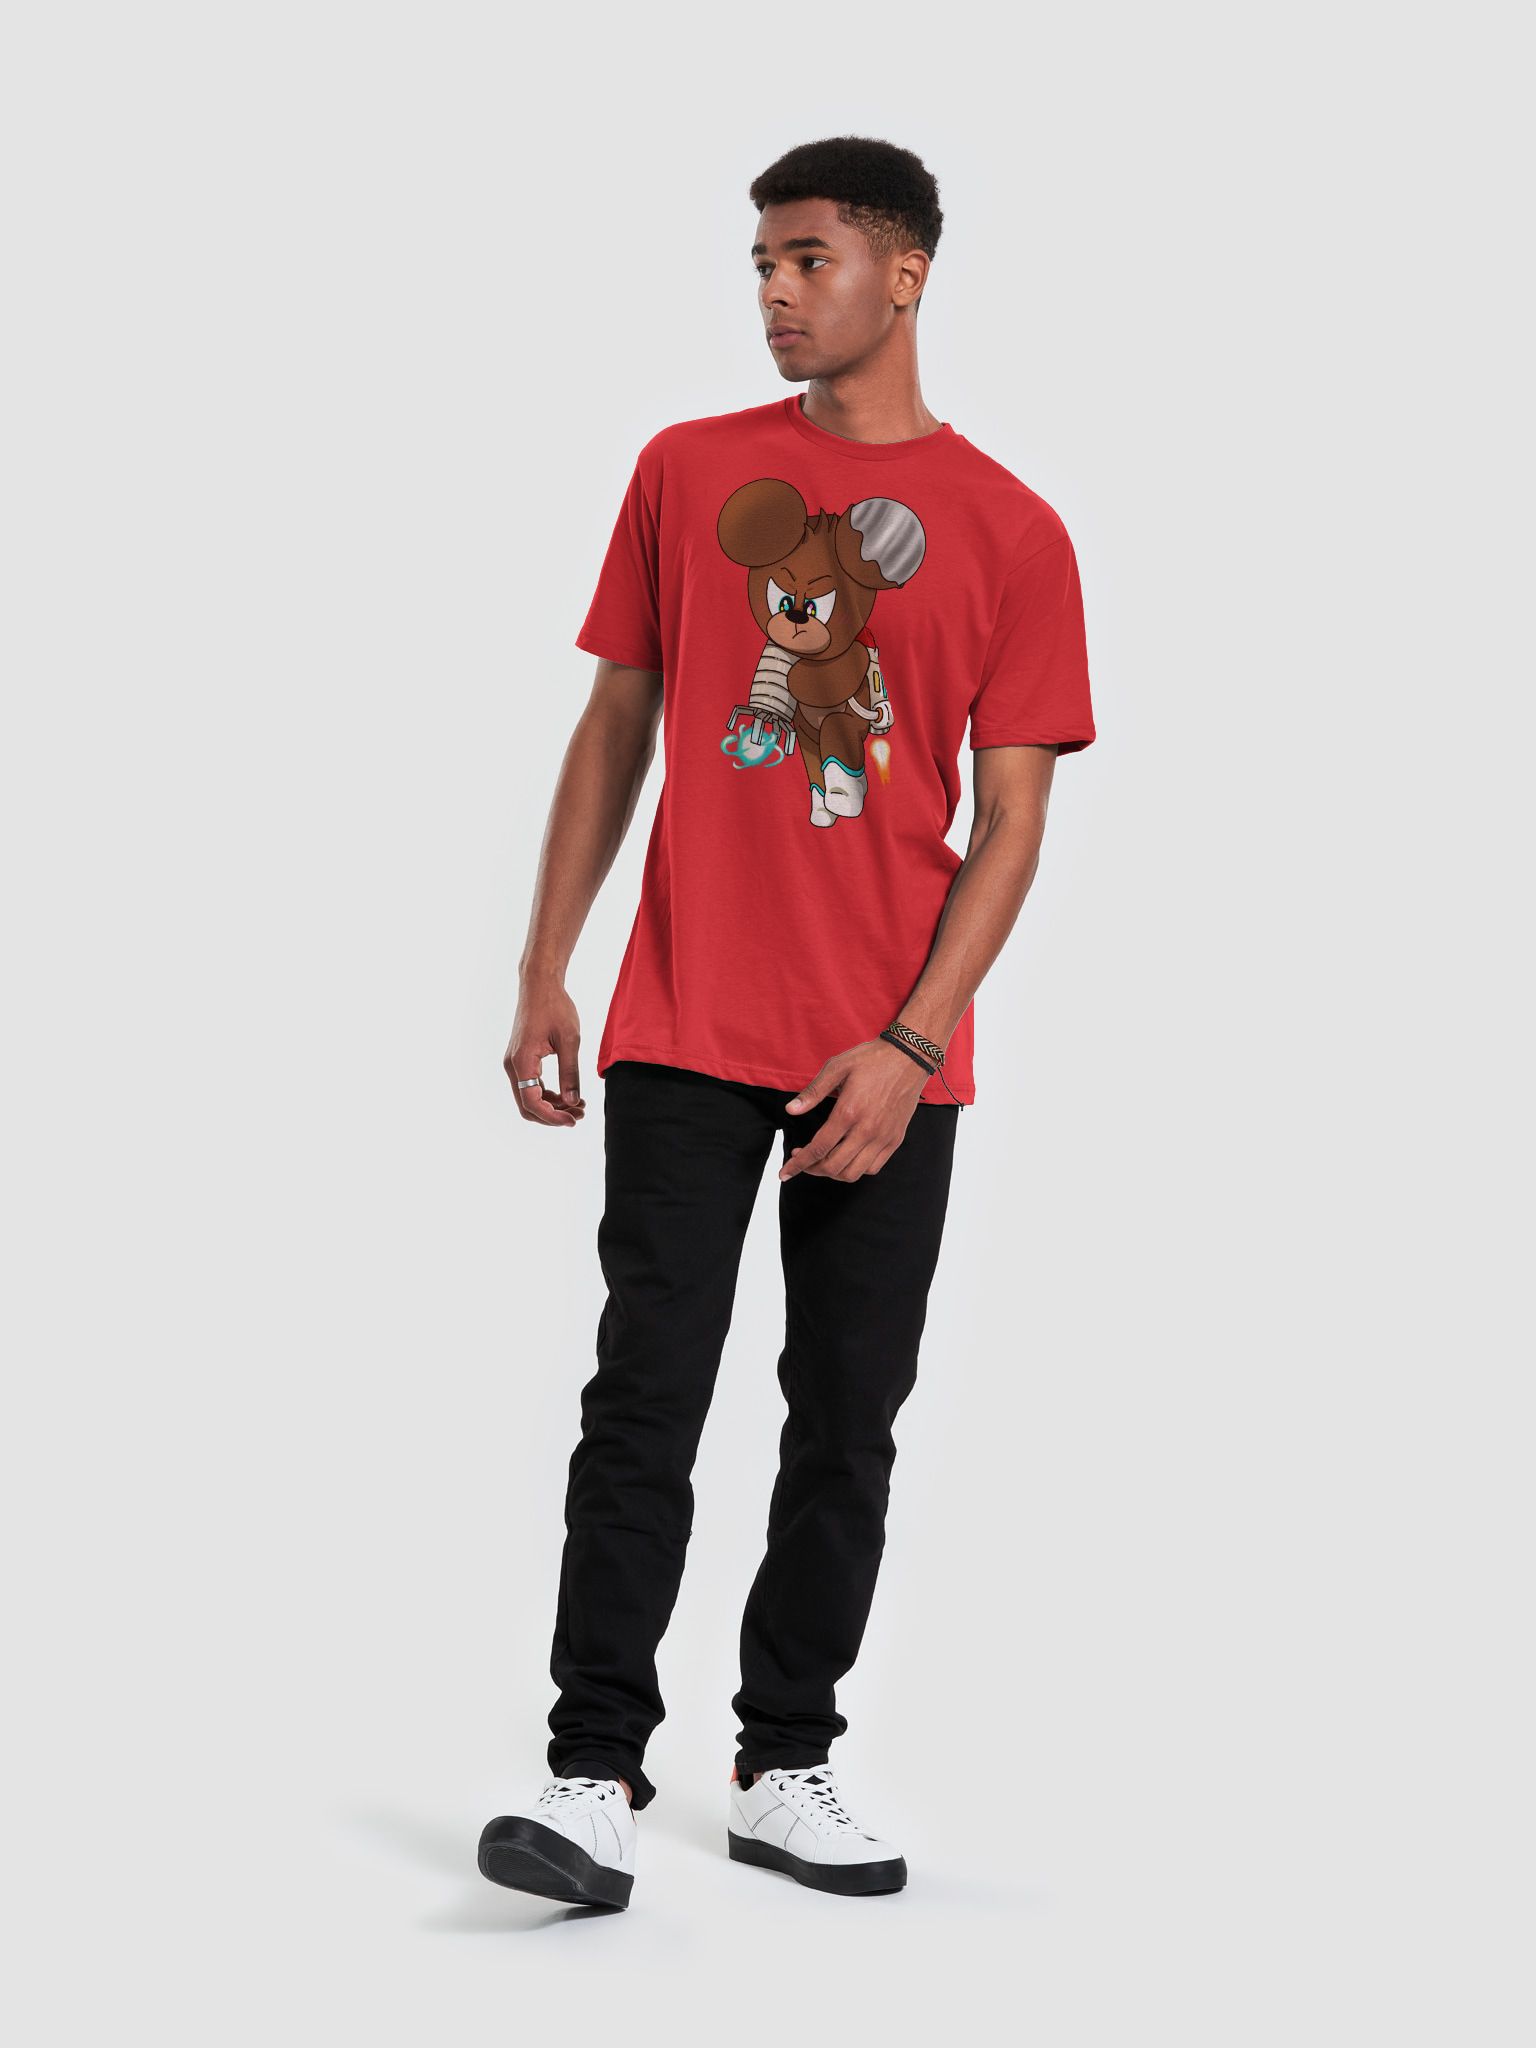 Kid Kuma T-Shirt 01 (Powersuit Red)